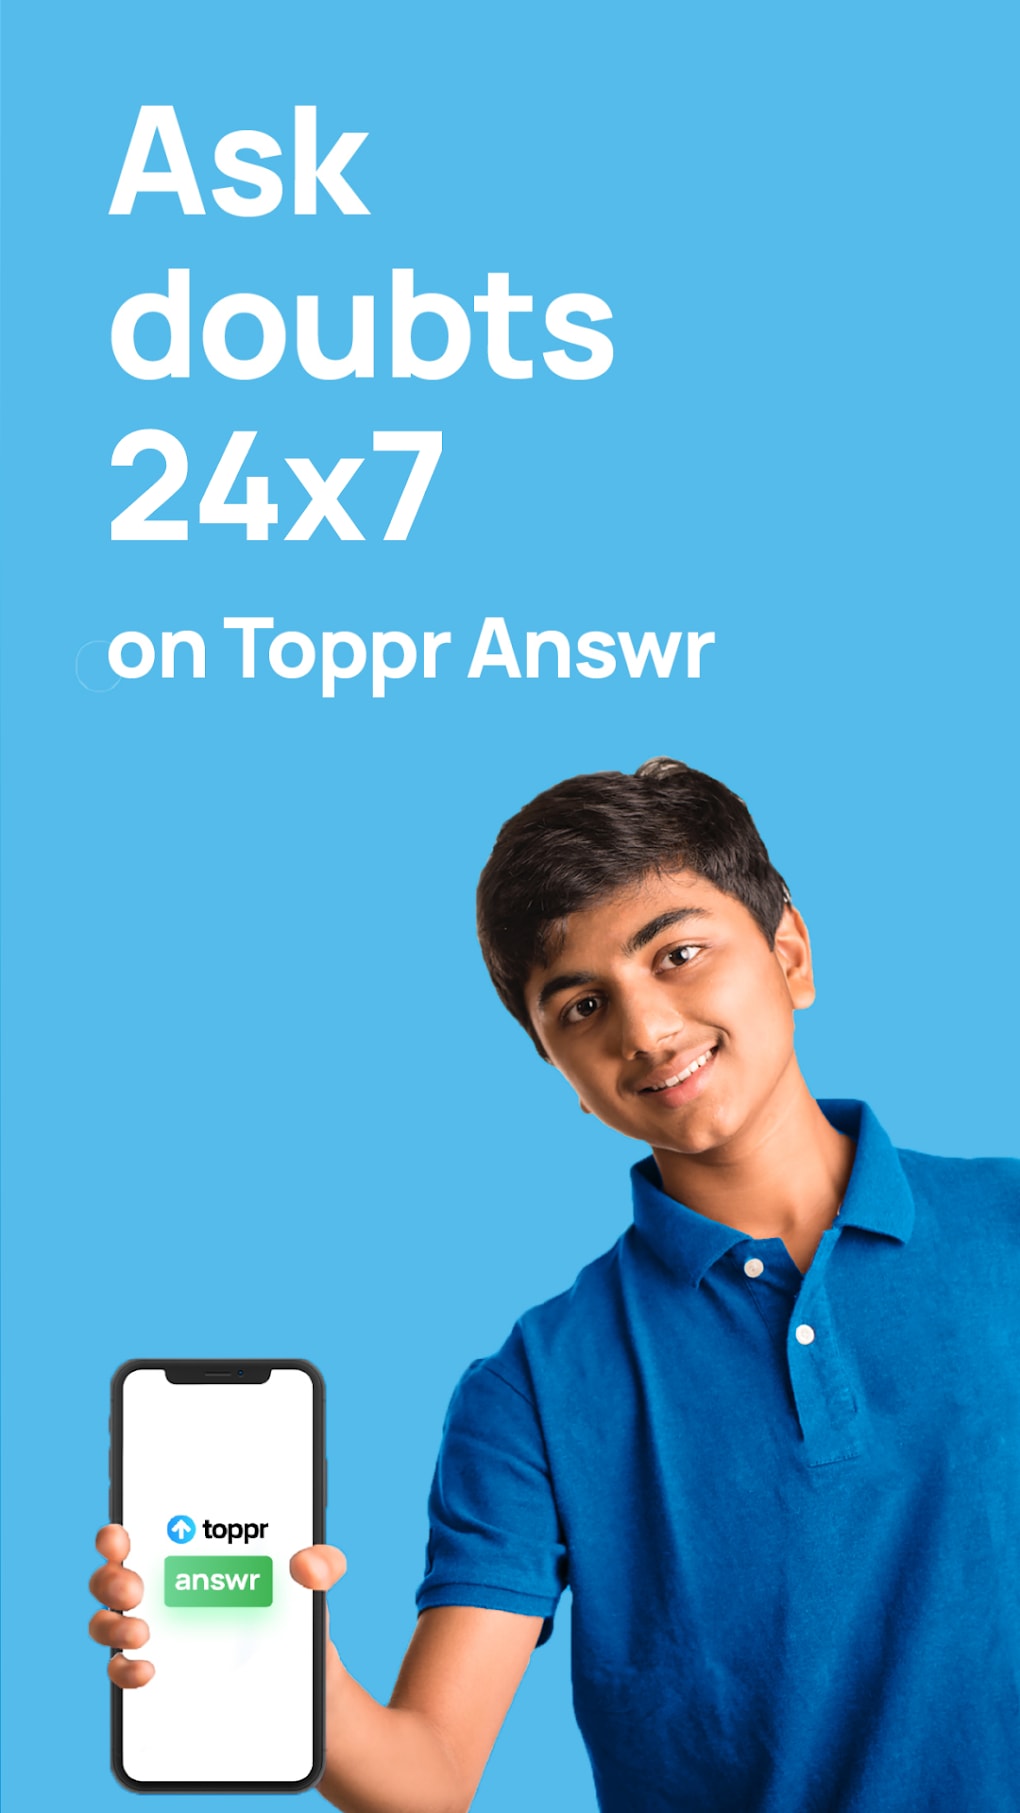 homework help app scan question get answer